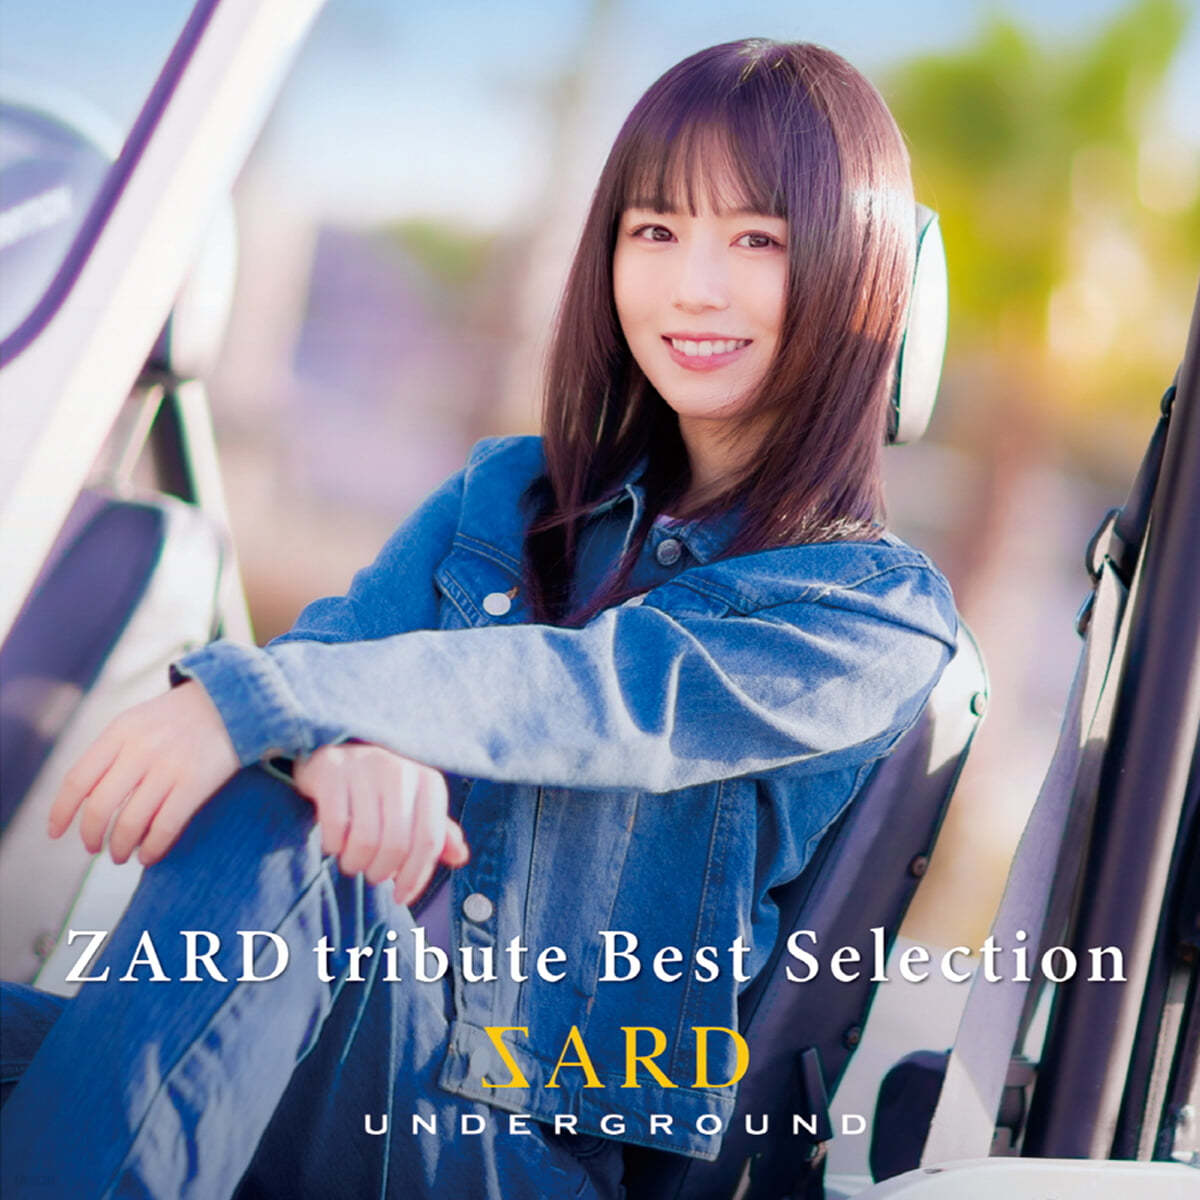 Sard Underground (사드 언더그라운드) -  ZARD tribute Best Selection